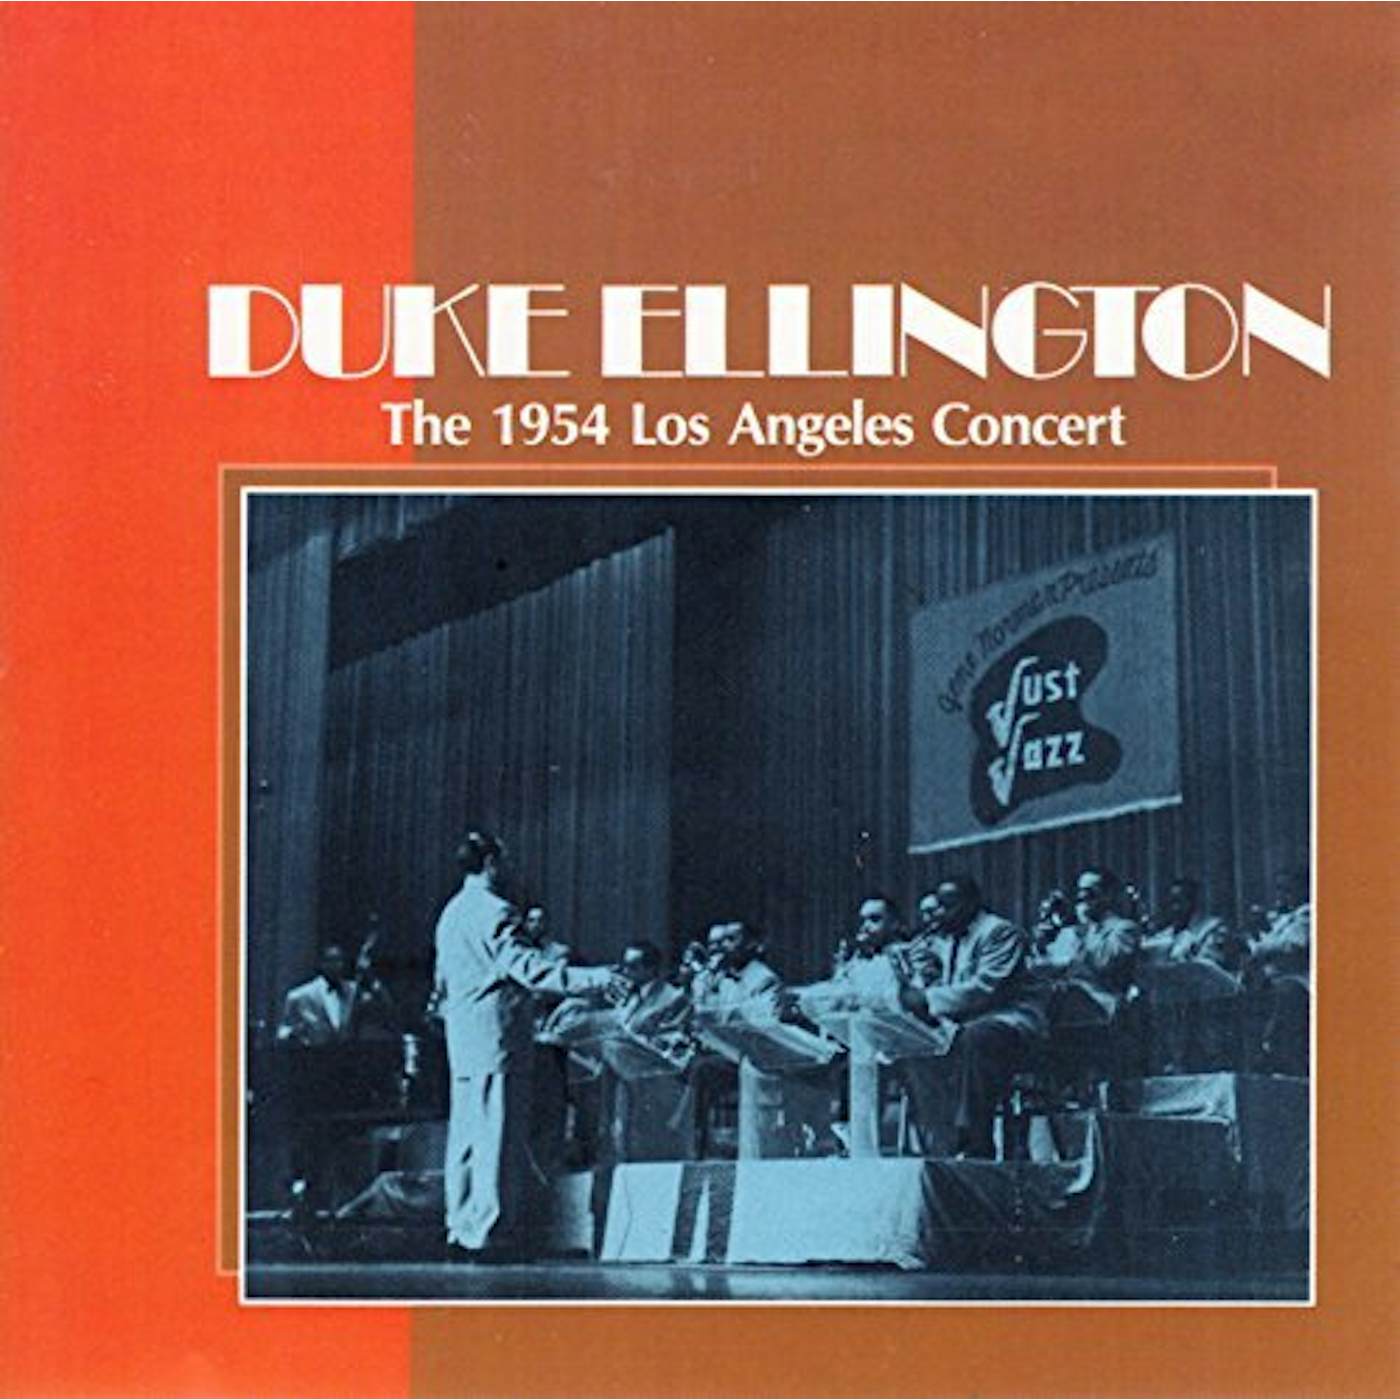 Duke Ellington 1954 LOS ANGELES CONCERT Vinyl Record